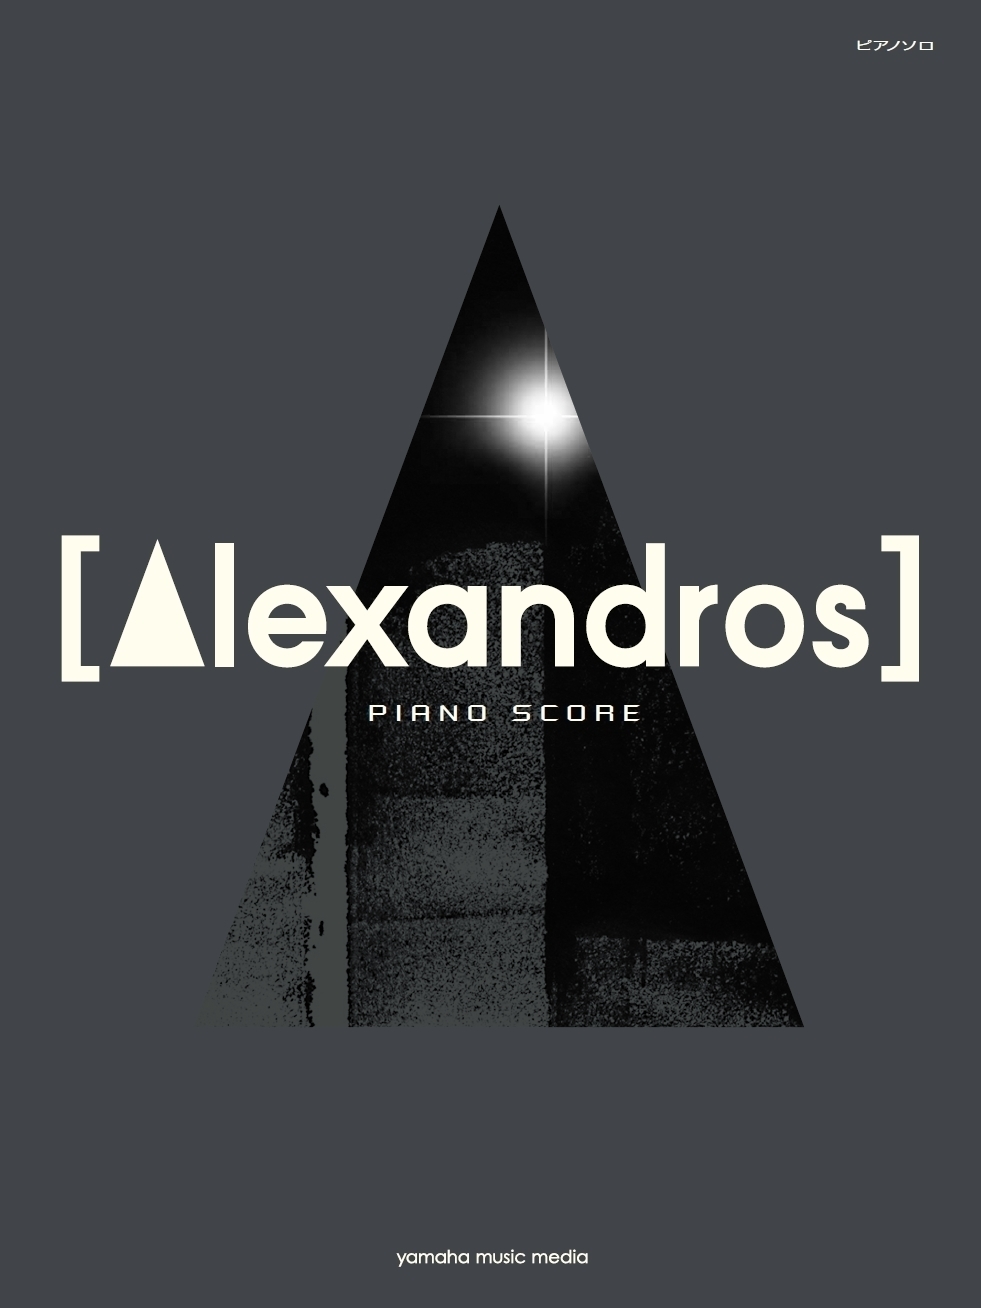 [Alexandros]、“Starrrrrrr”、“ワタリドリ”など18曲収載したピアノ